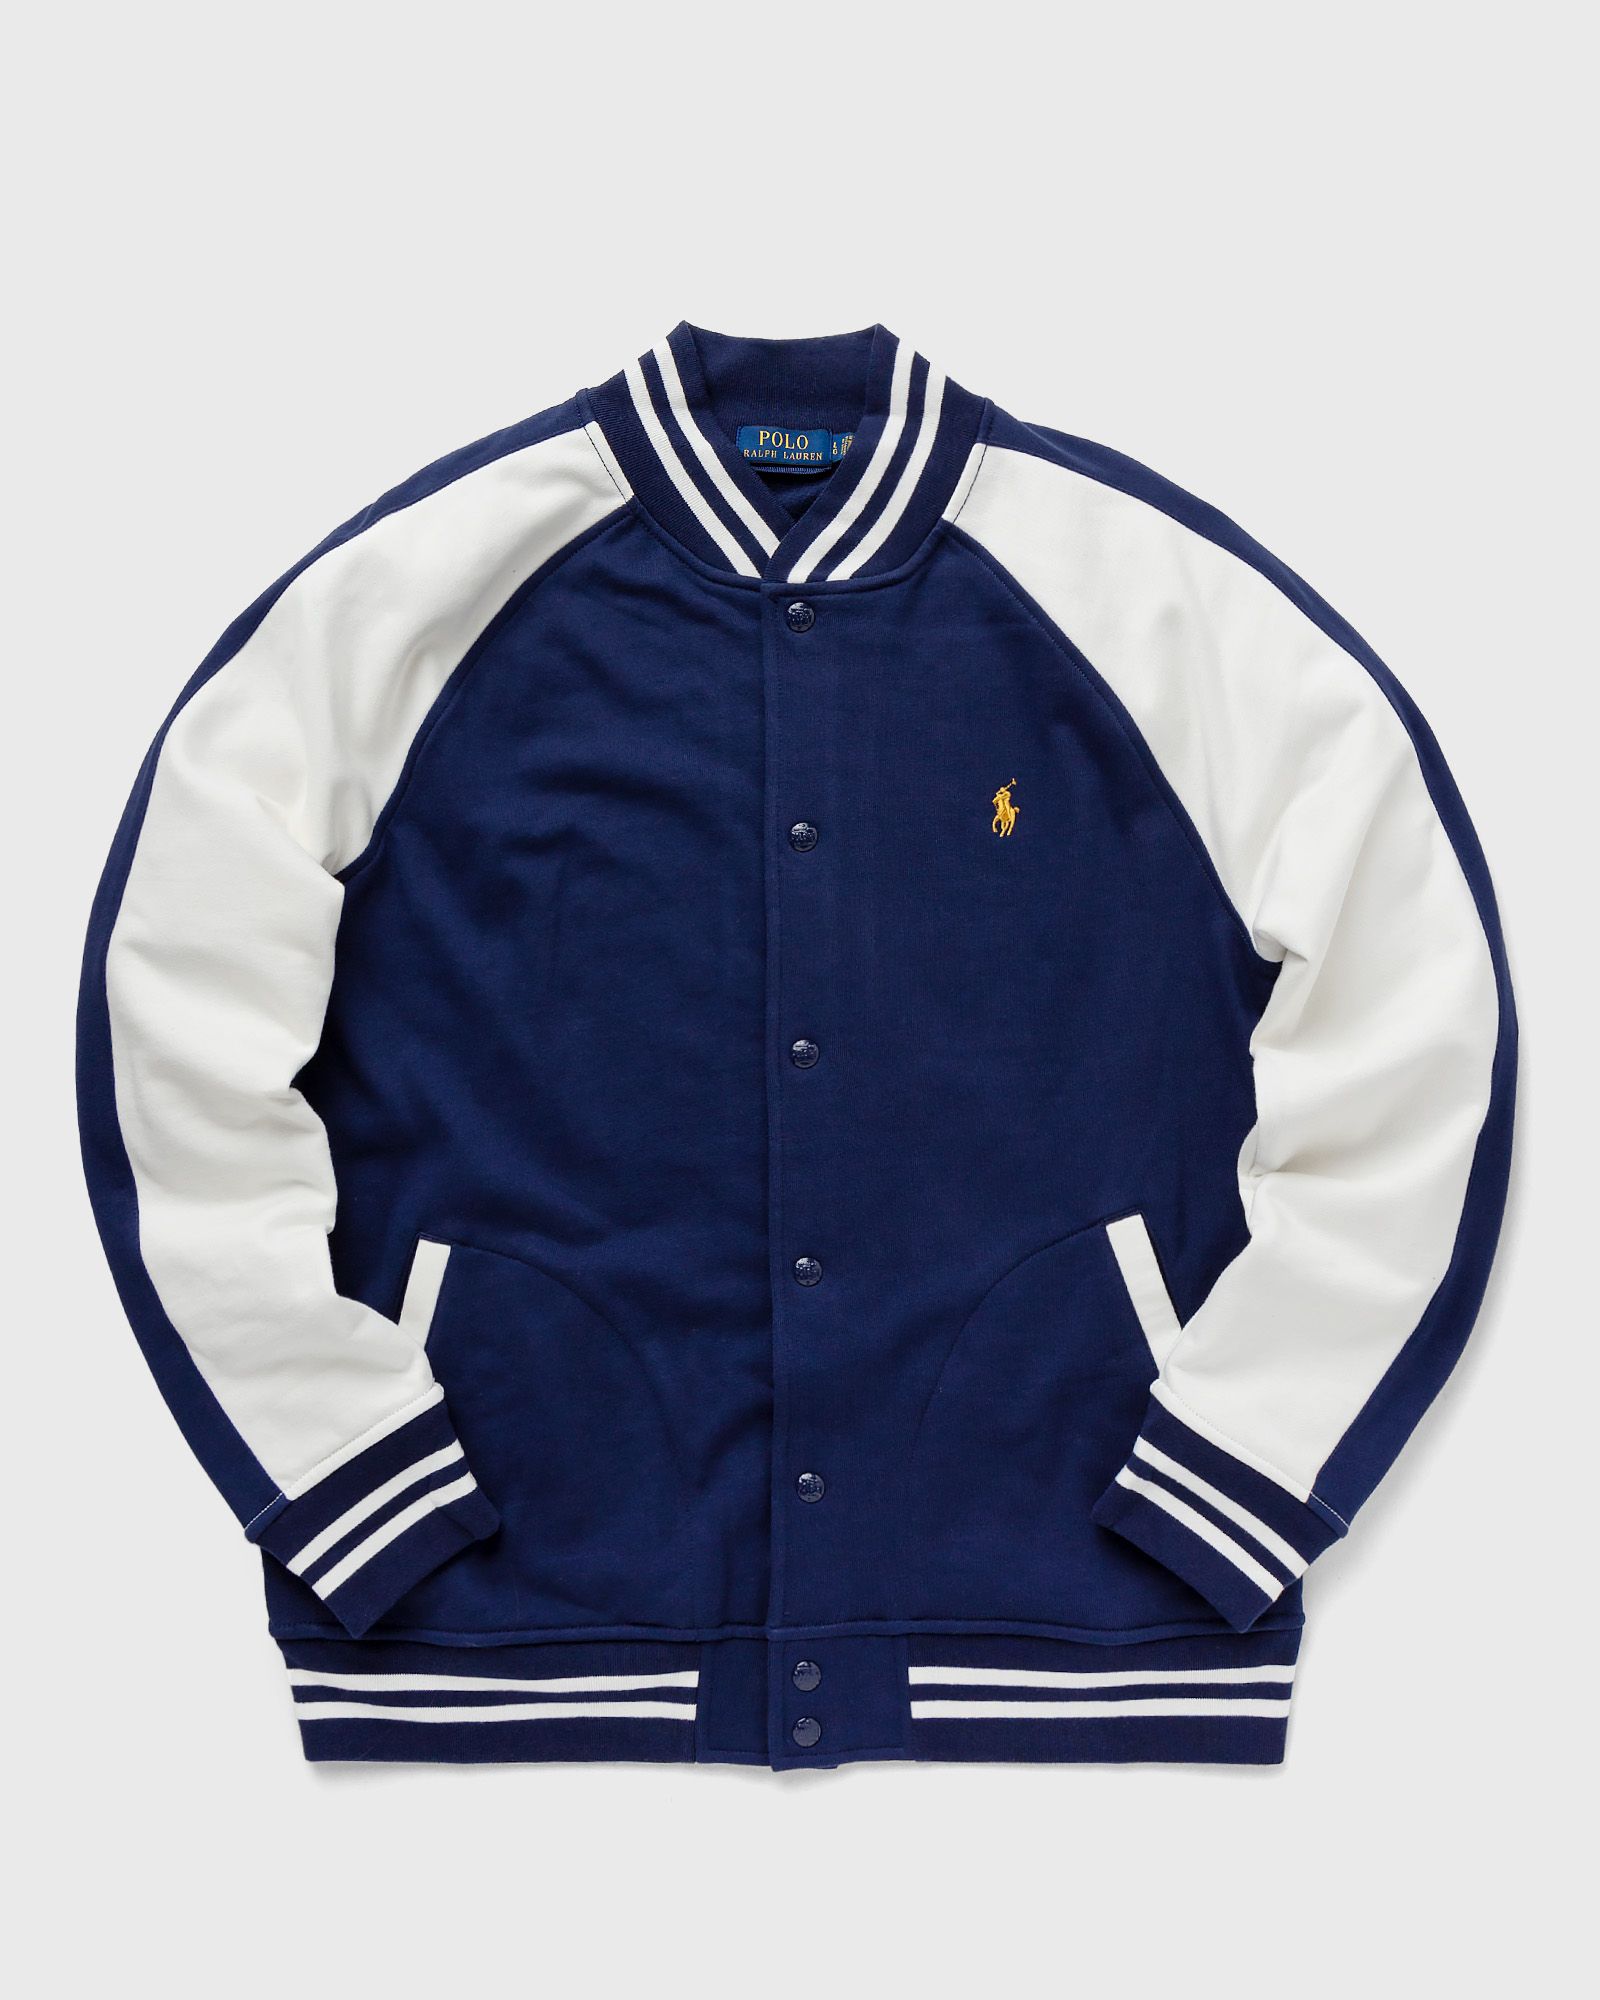 Polo Ralph Lauren - long sleeve-sweatshirt men college jackets blue|white in größe:xxl